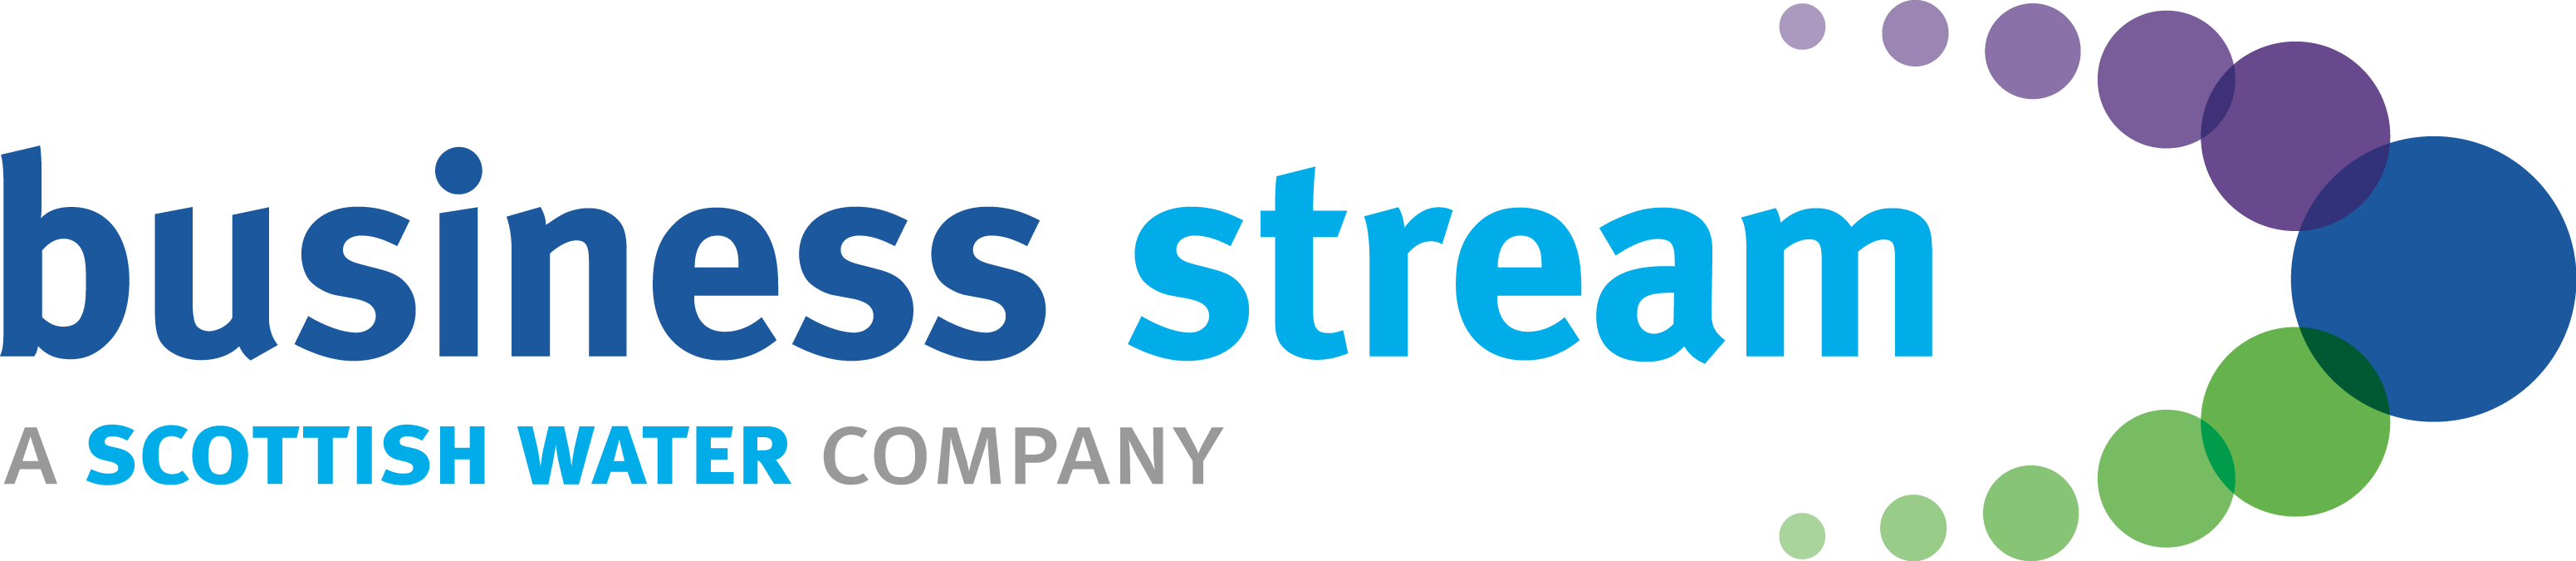 Scottish Water Business Stream Limited